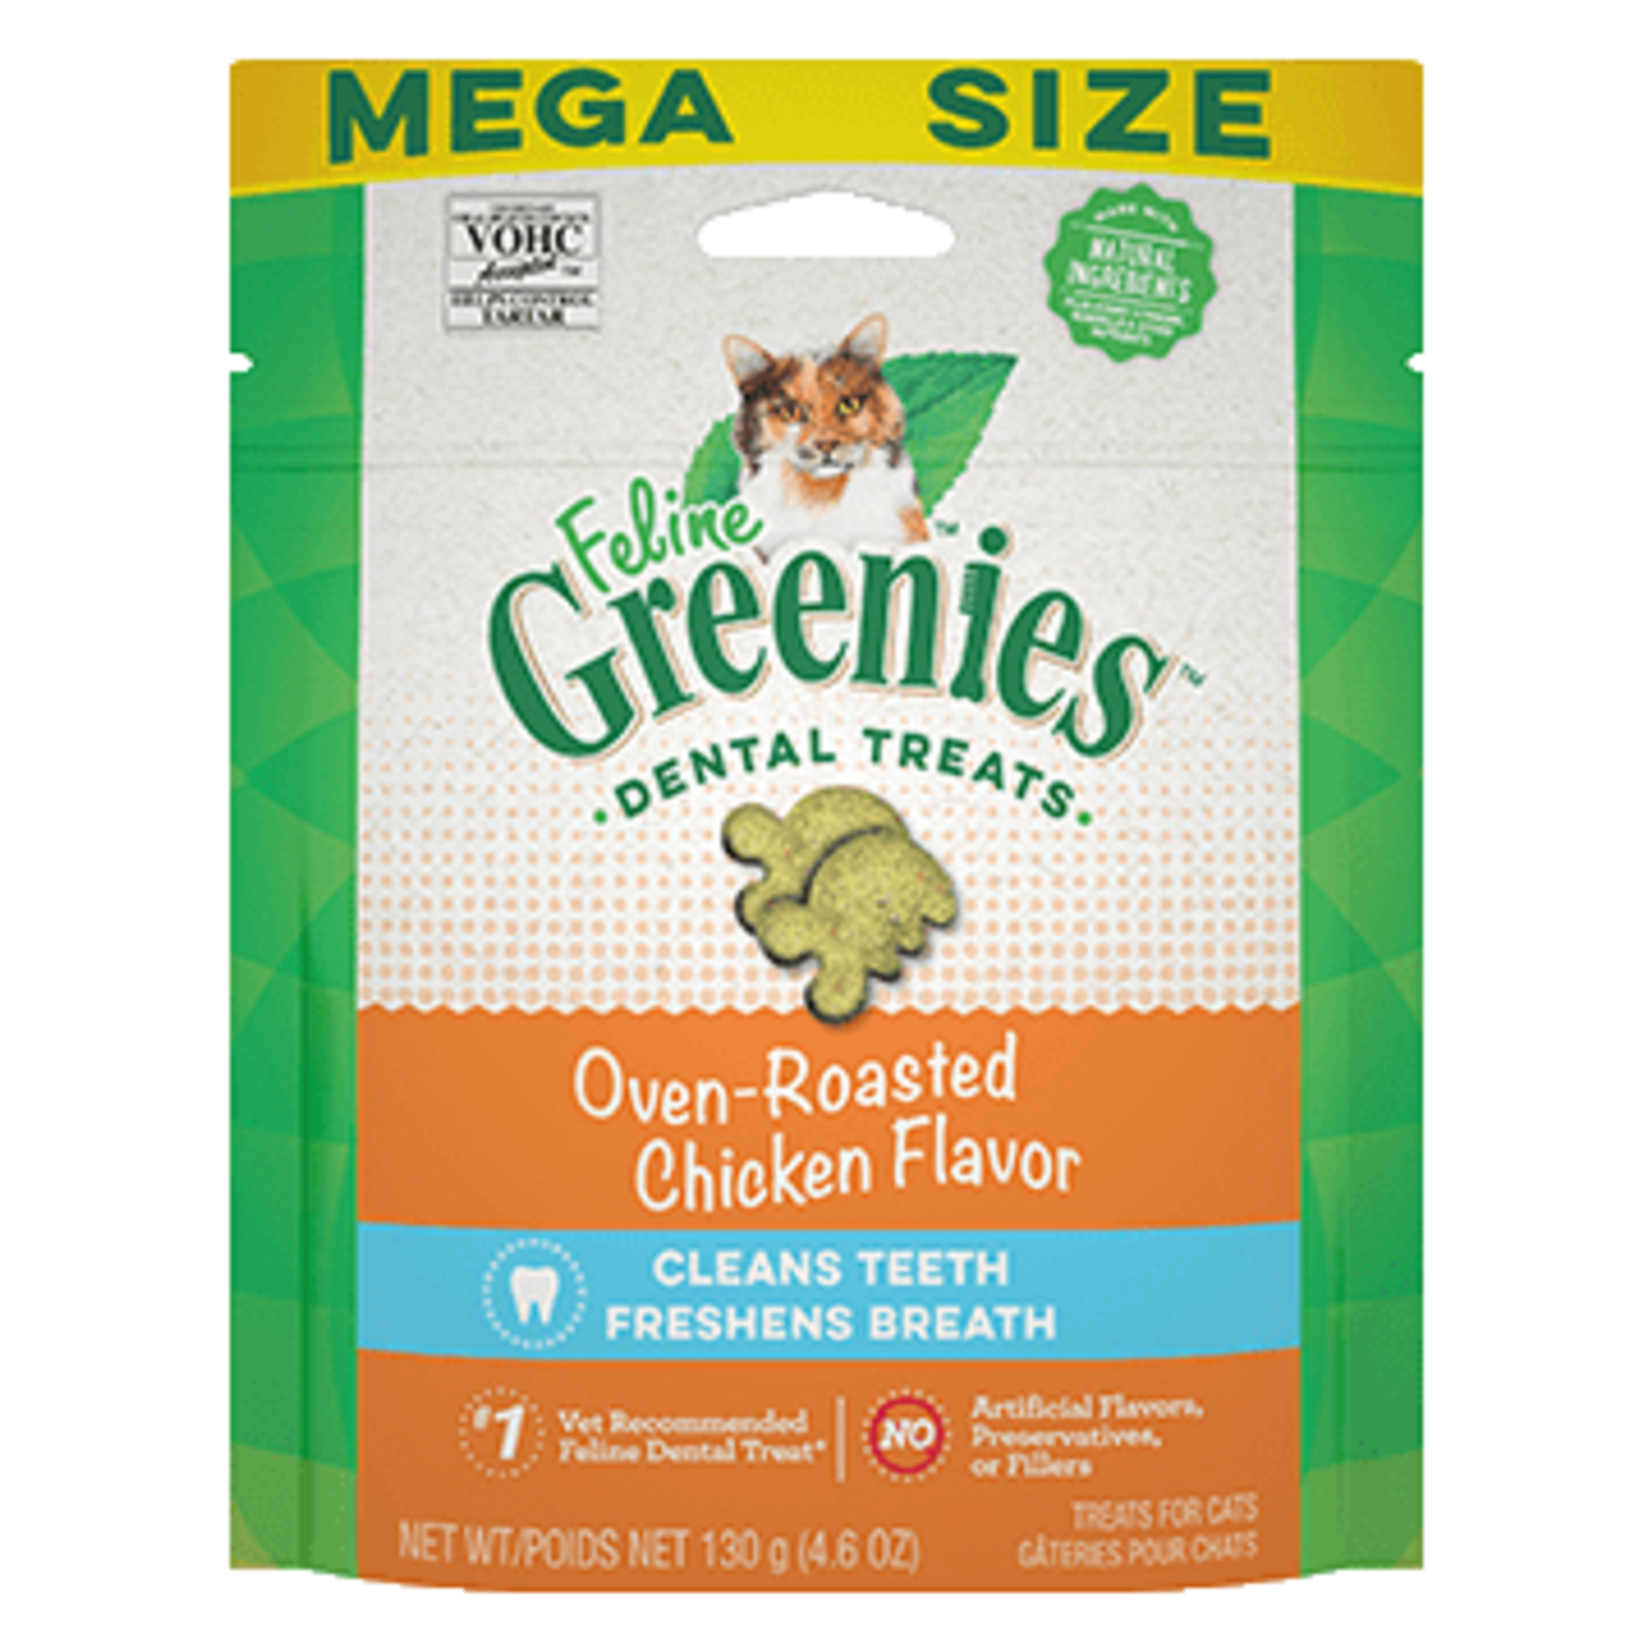 Greenies Feline Greenies Cat Dental Treats Oven-Roasted Chicken Flavor